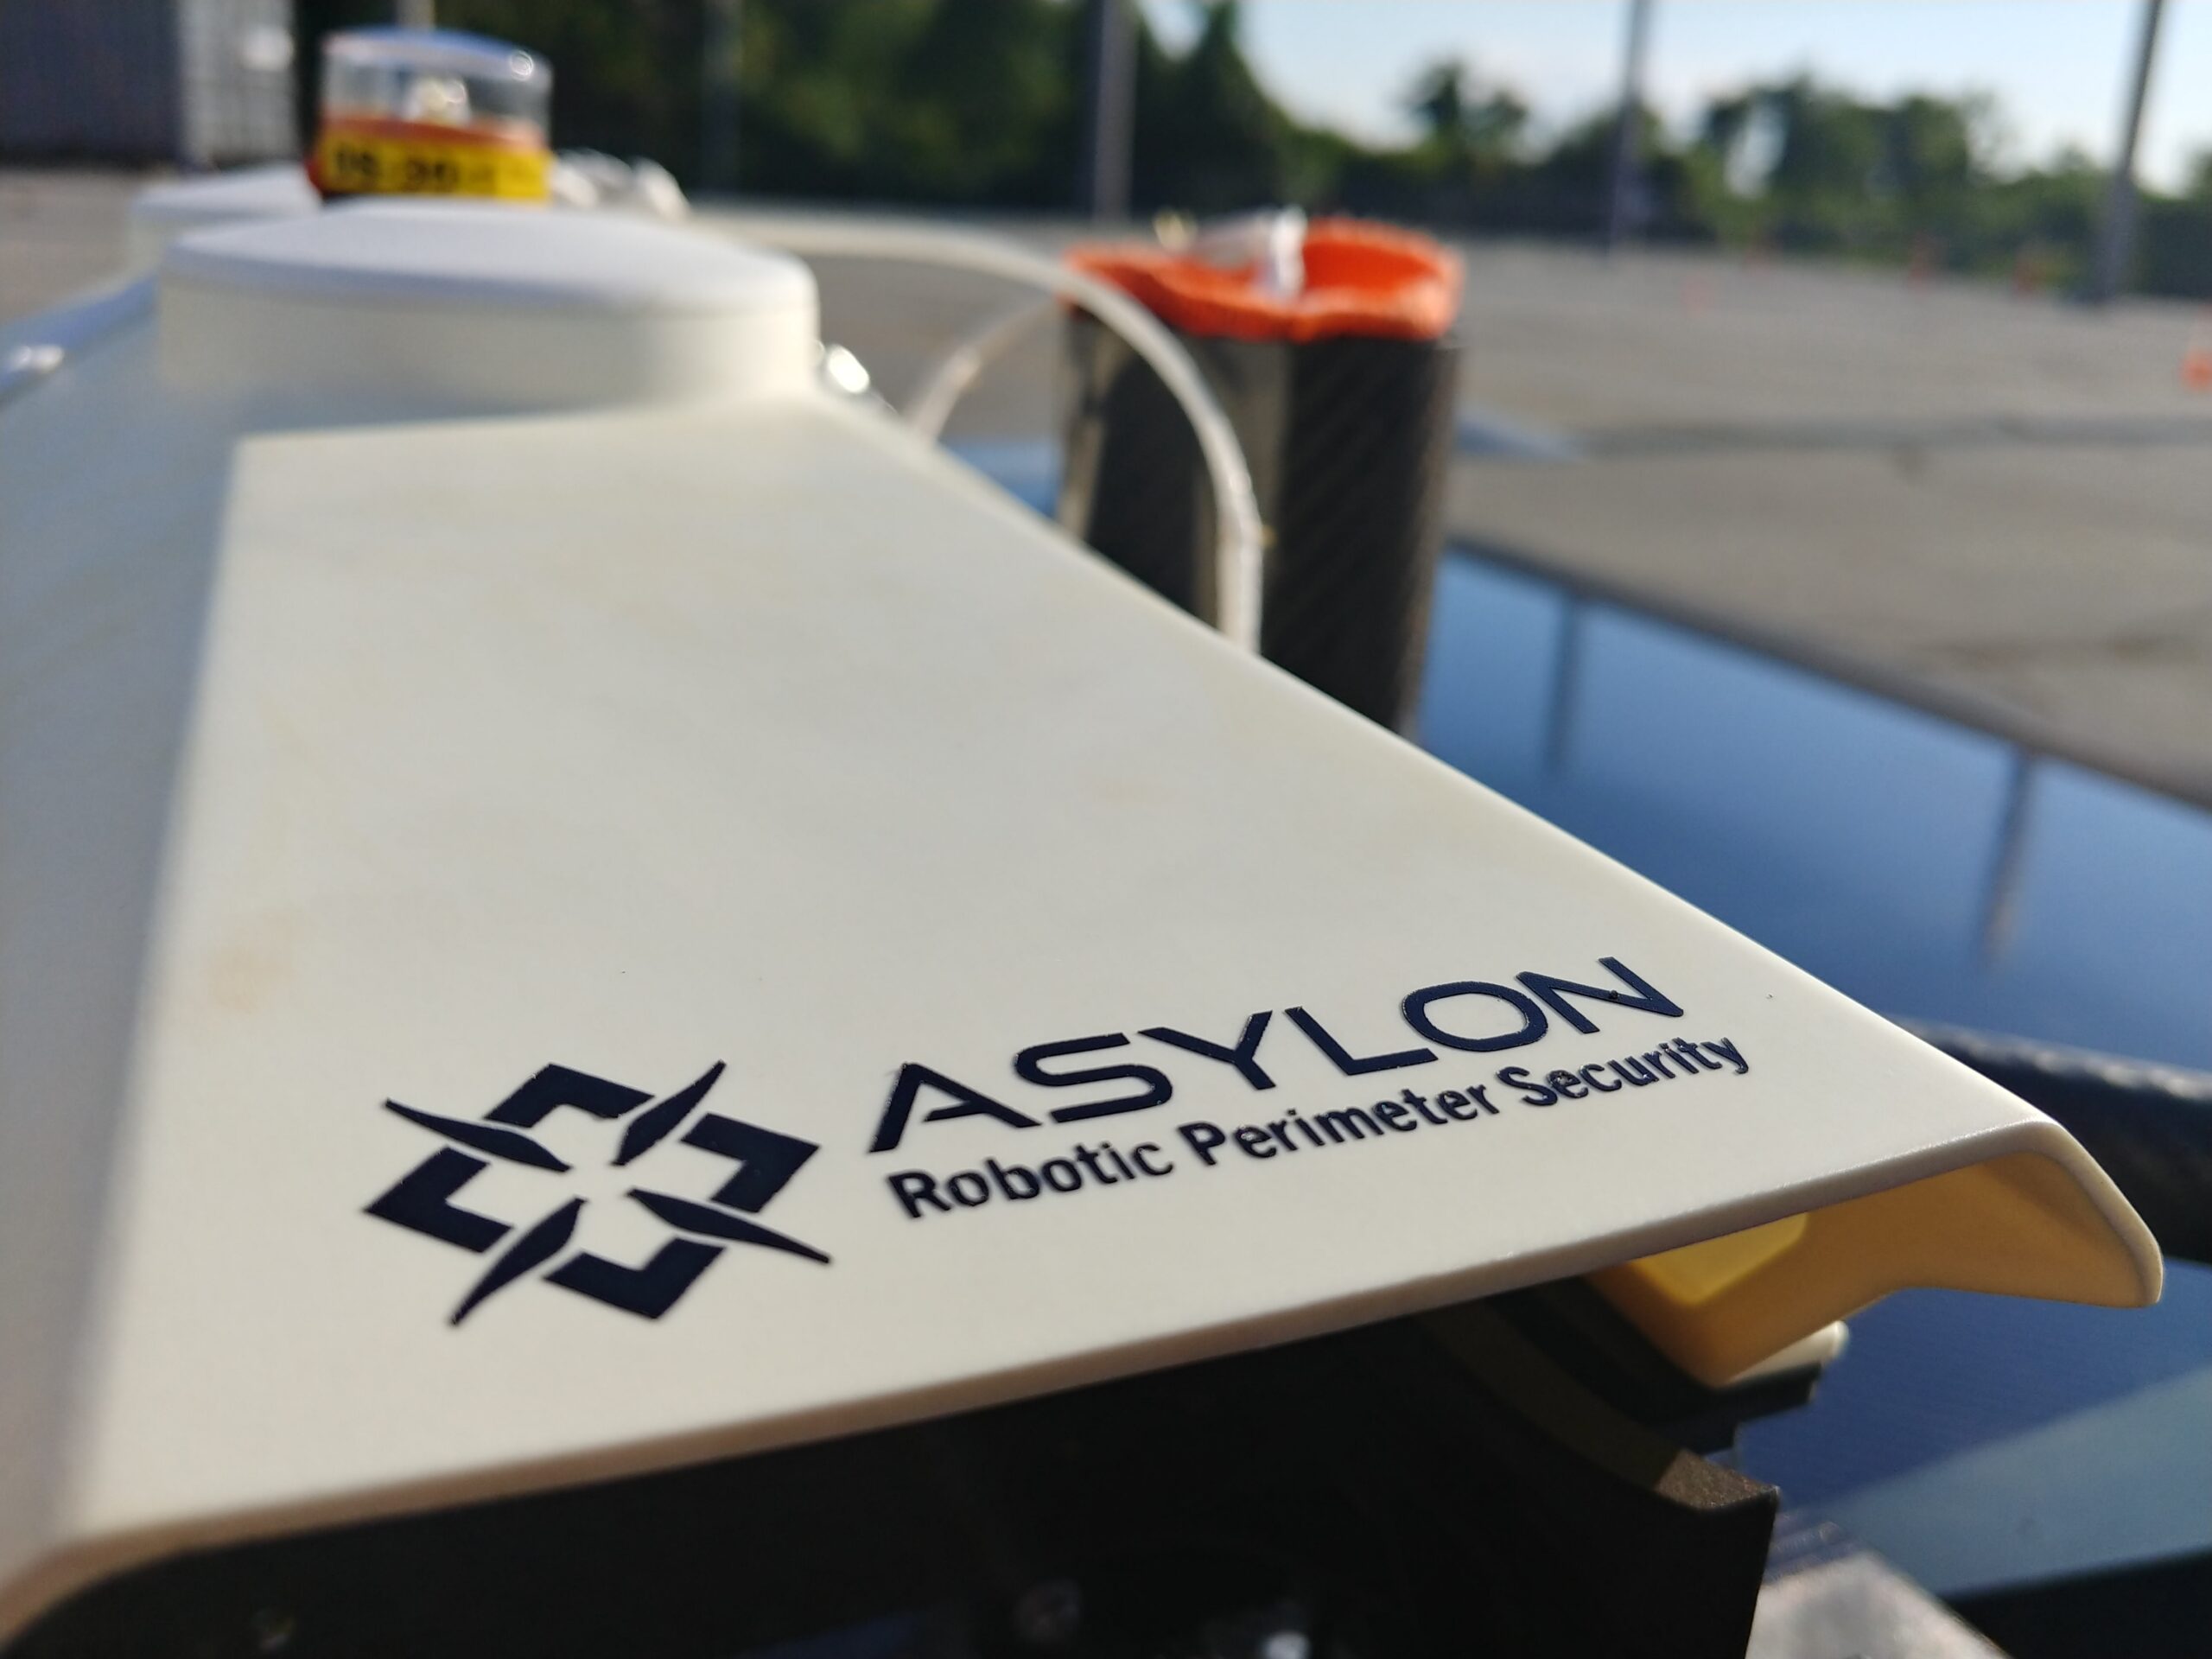 Asylon Robotic Perimeter Security